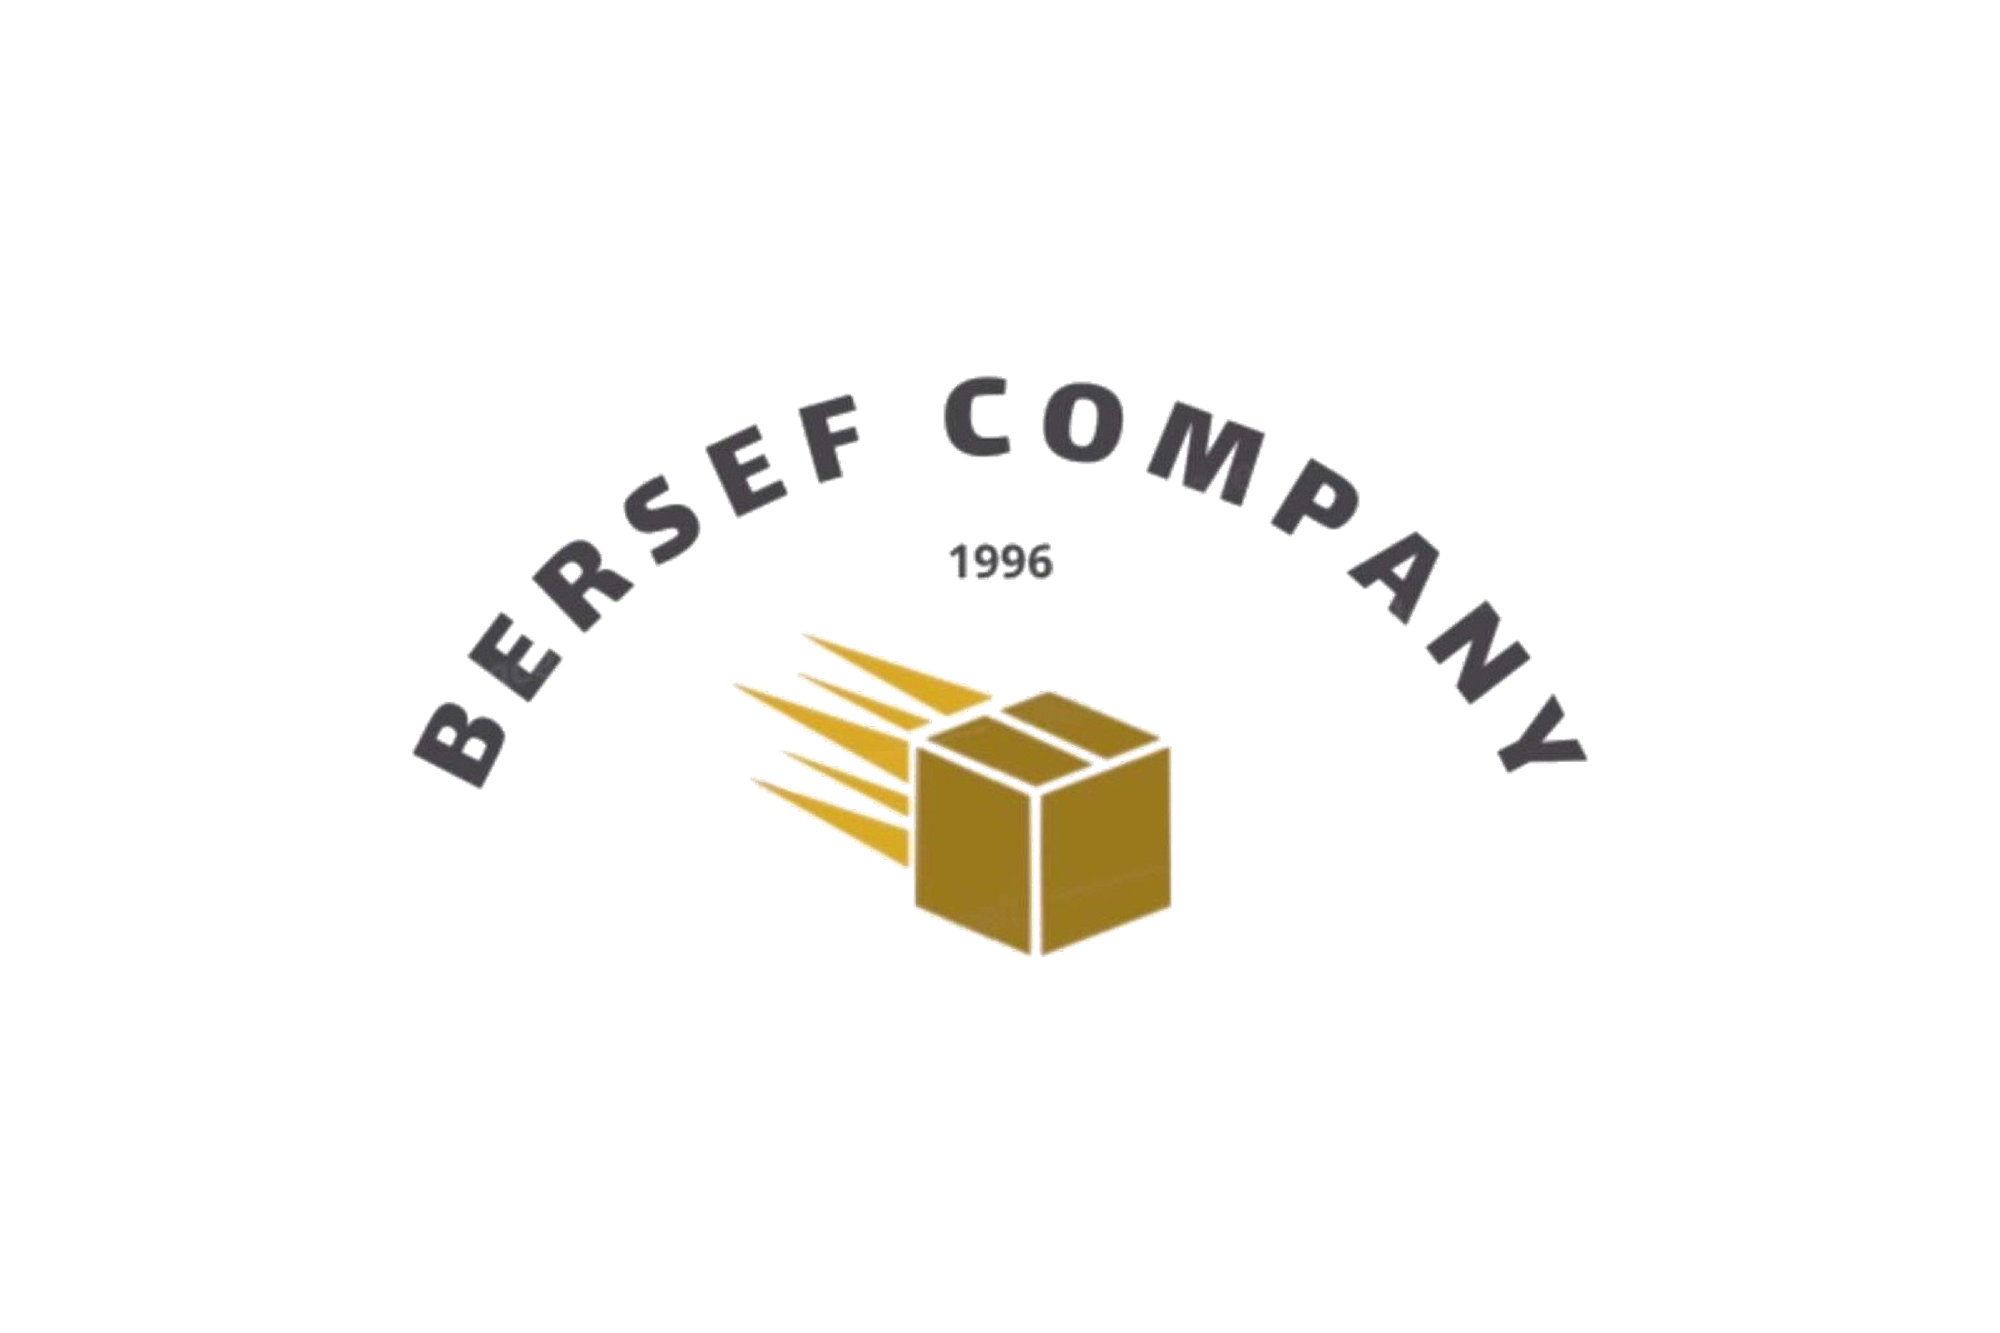 Bersef Company